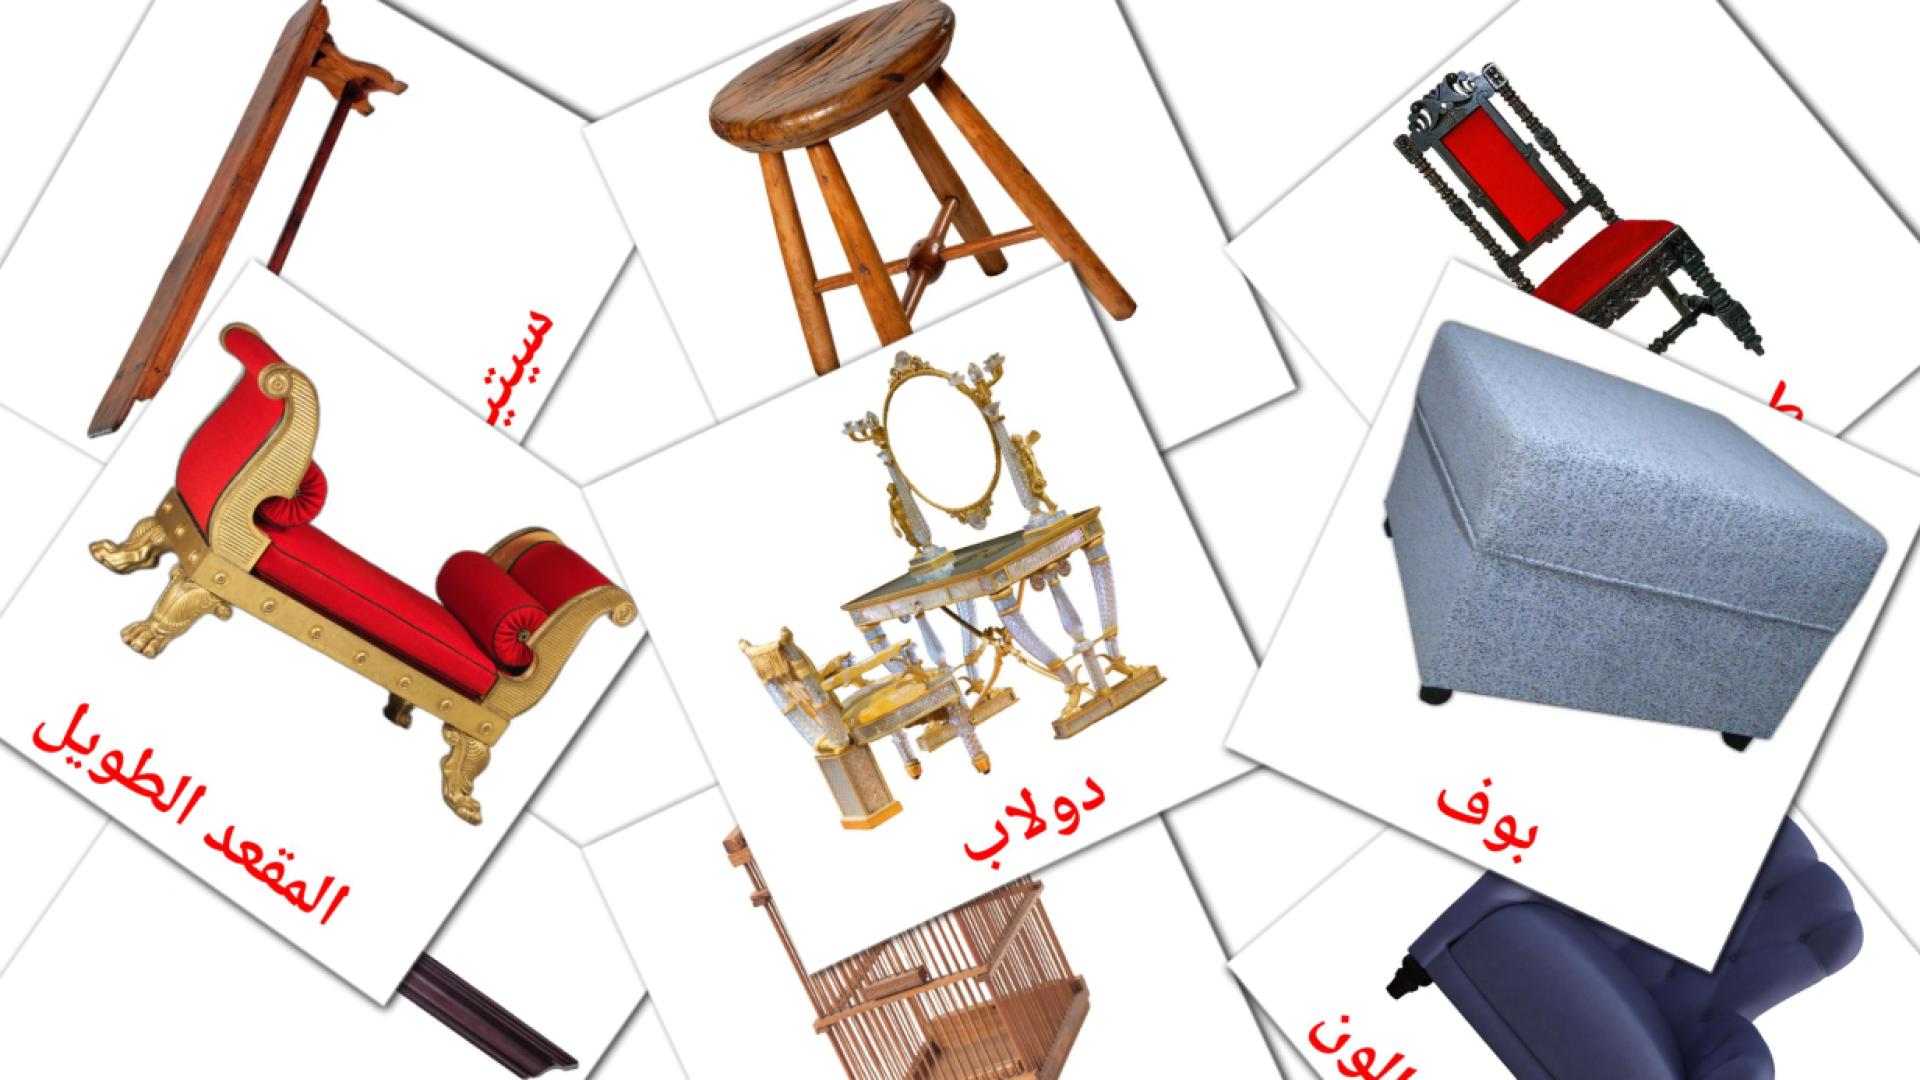 Furniture - arabic vocabulary cards